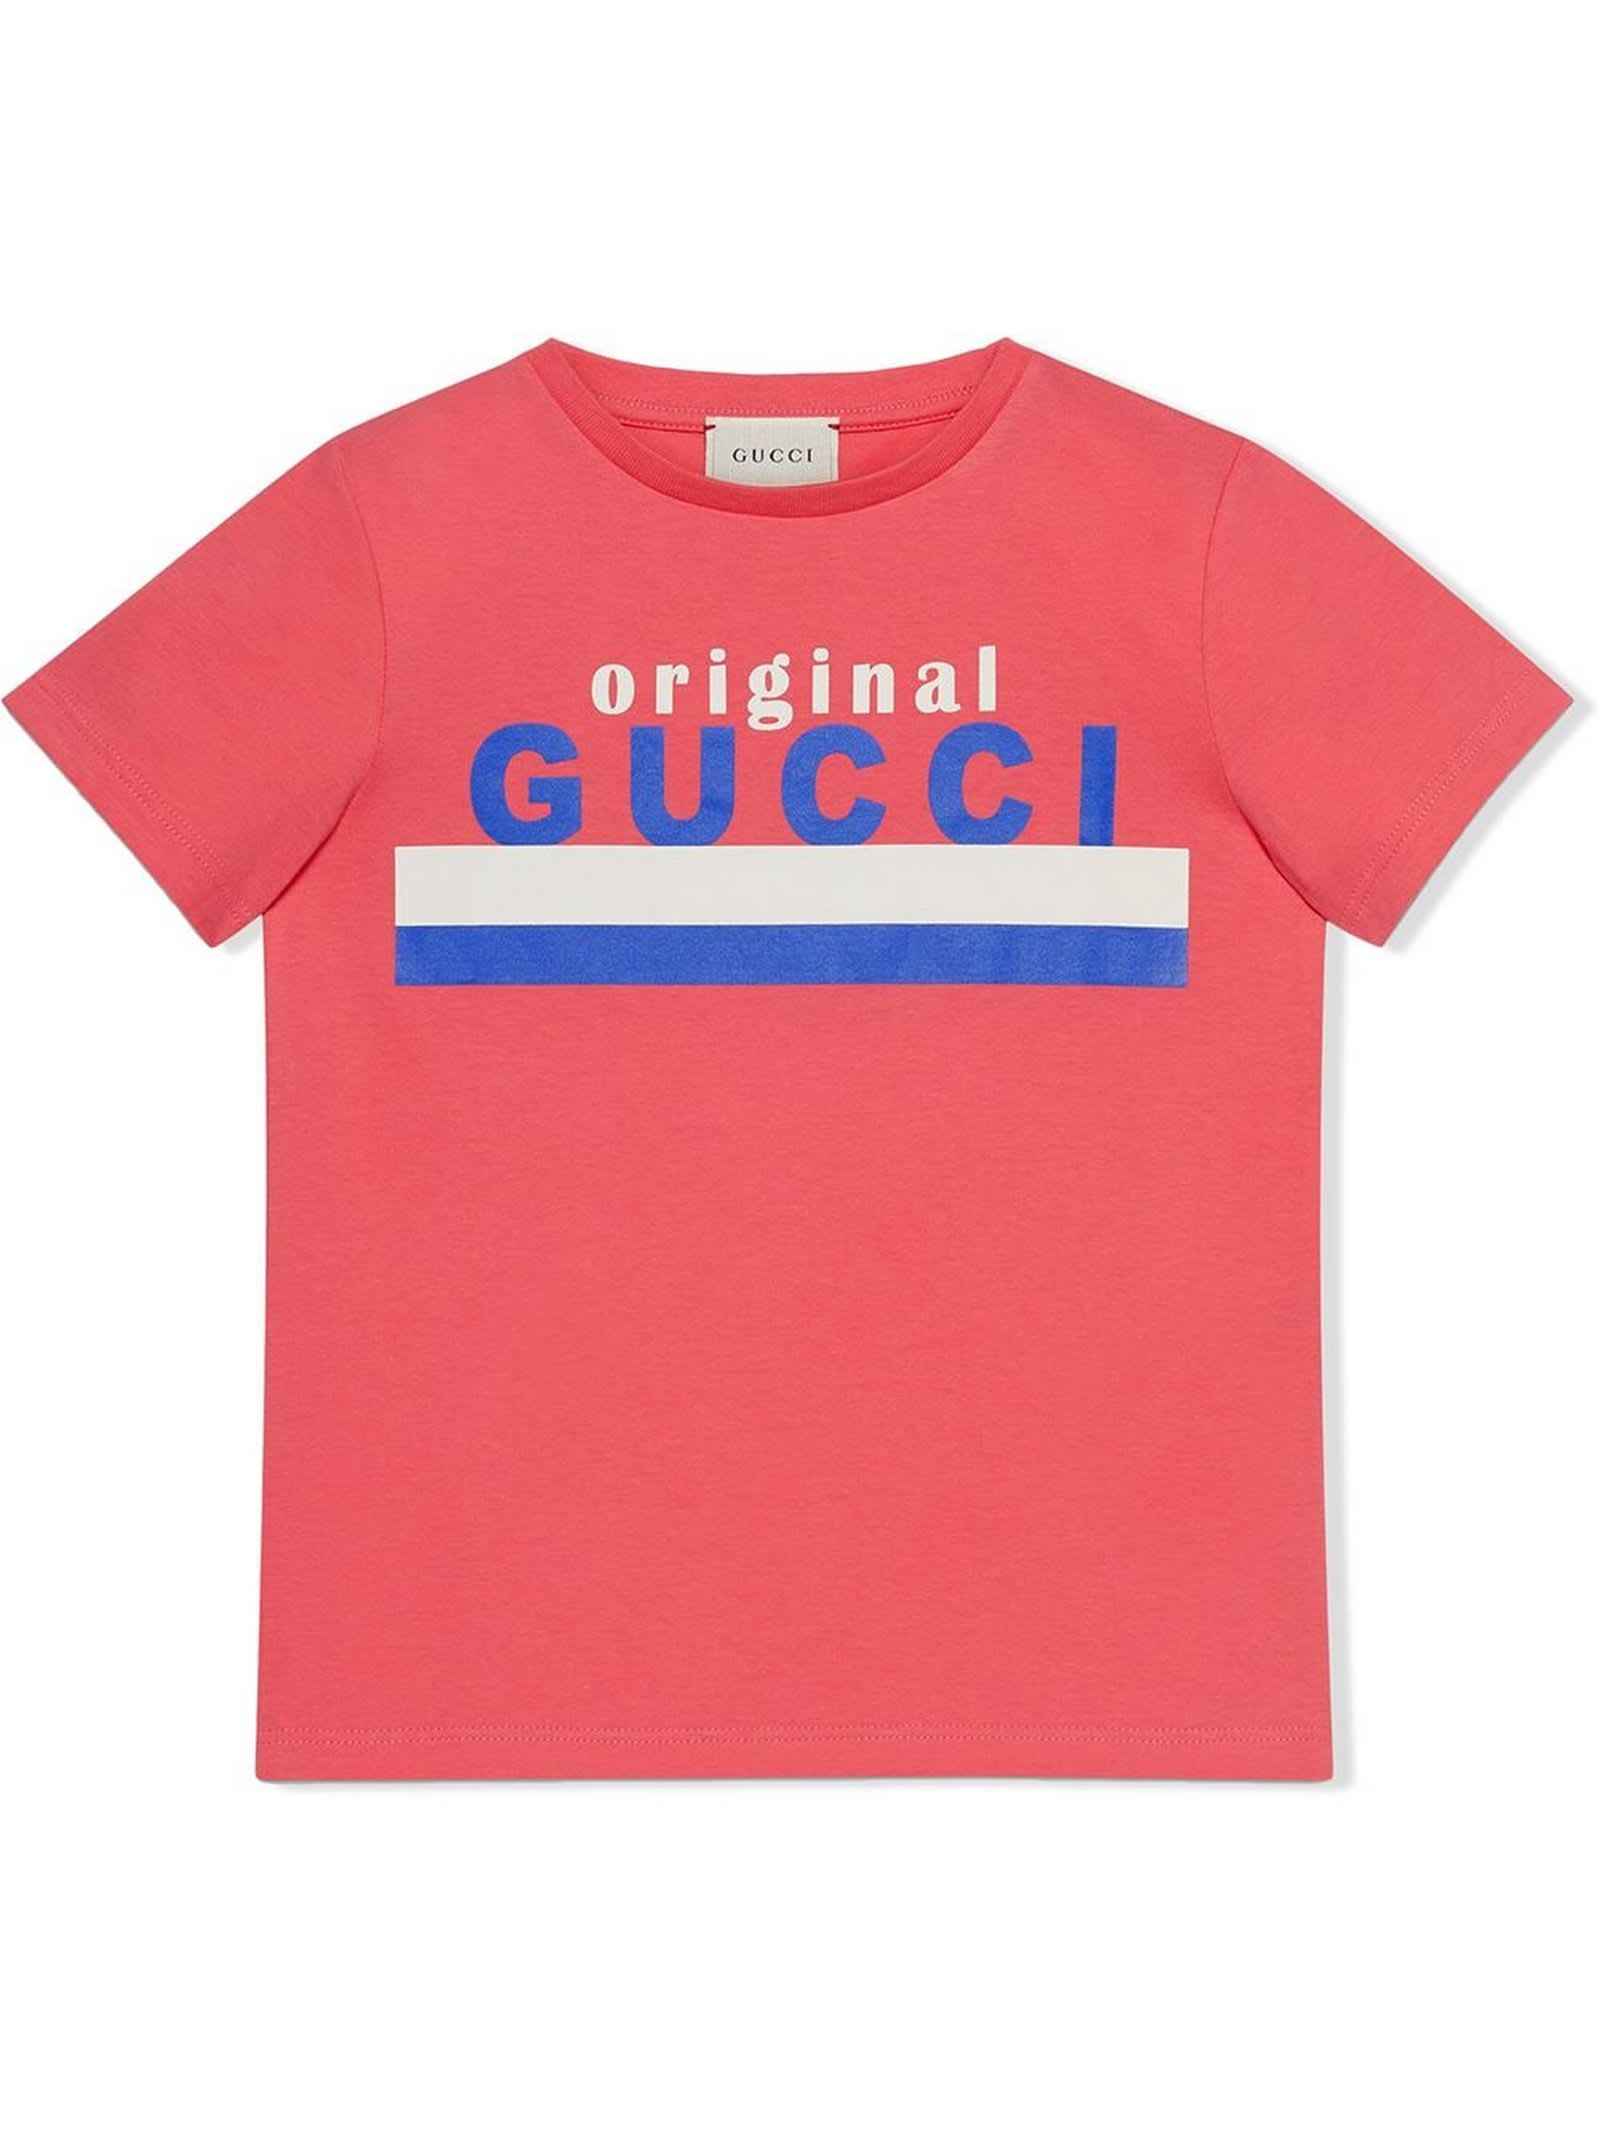 Gucci Childrens original Gucci T-shirt